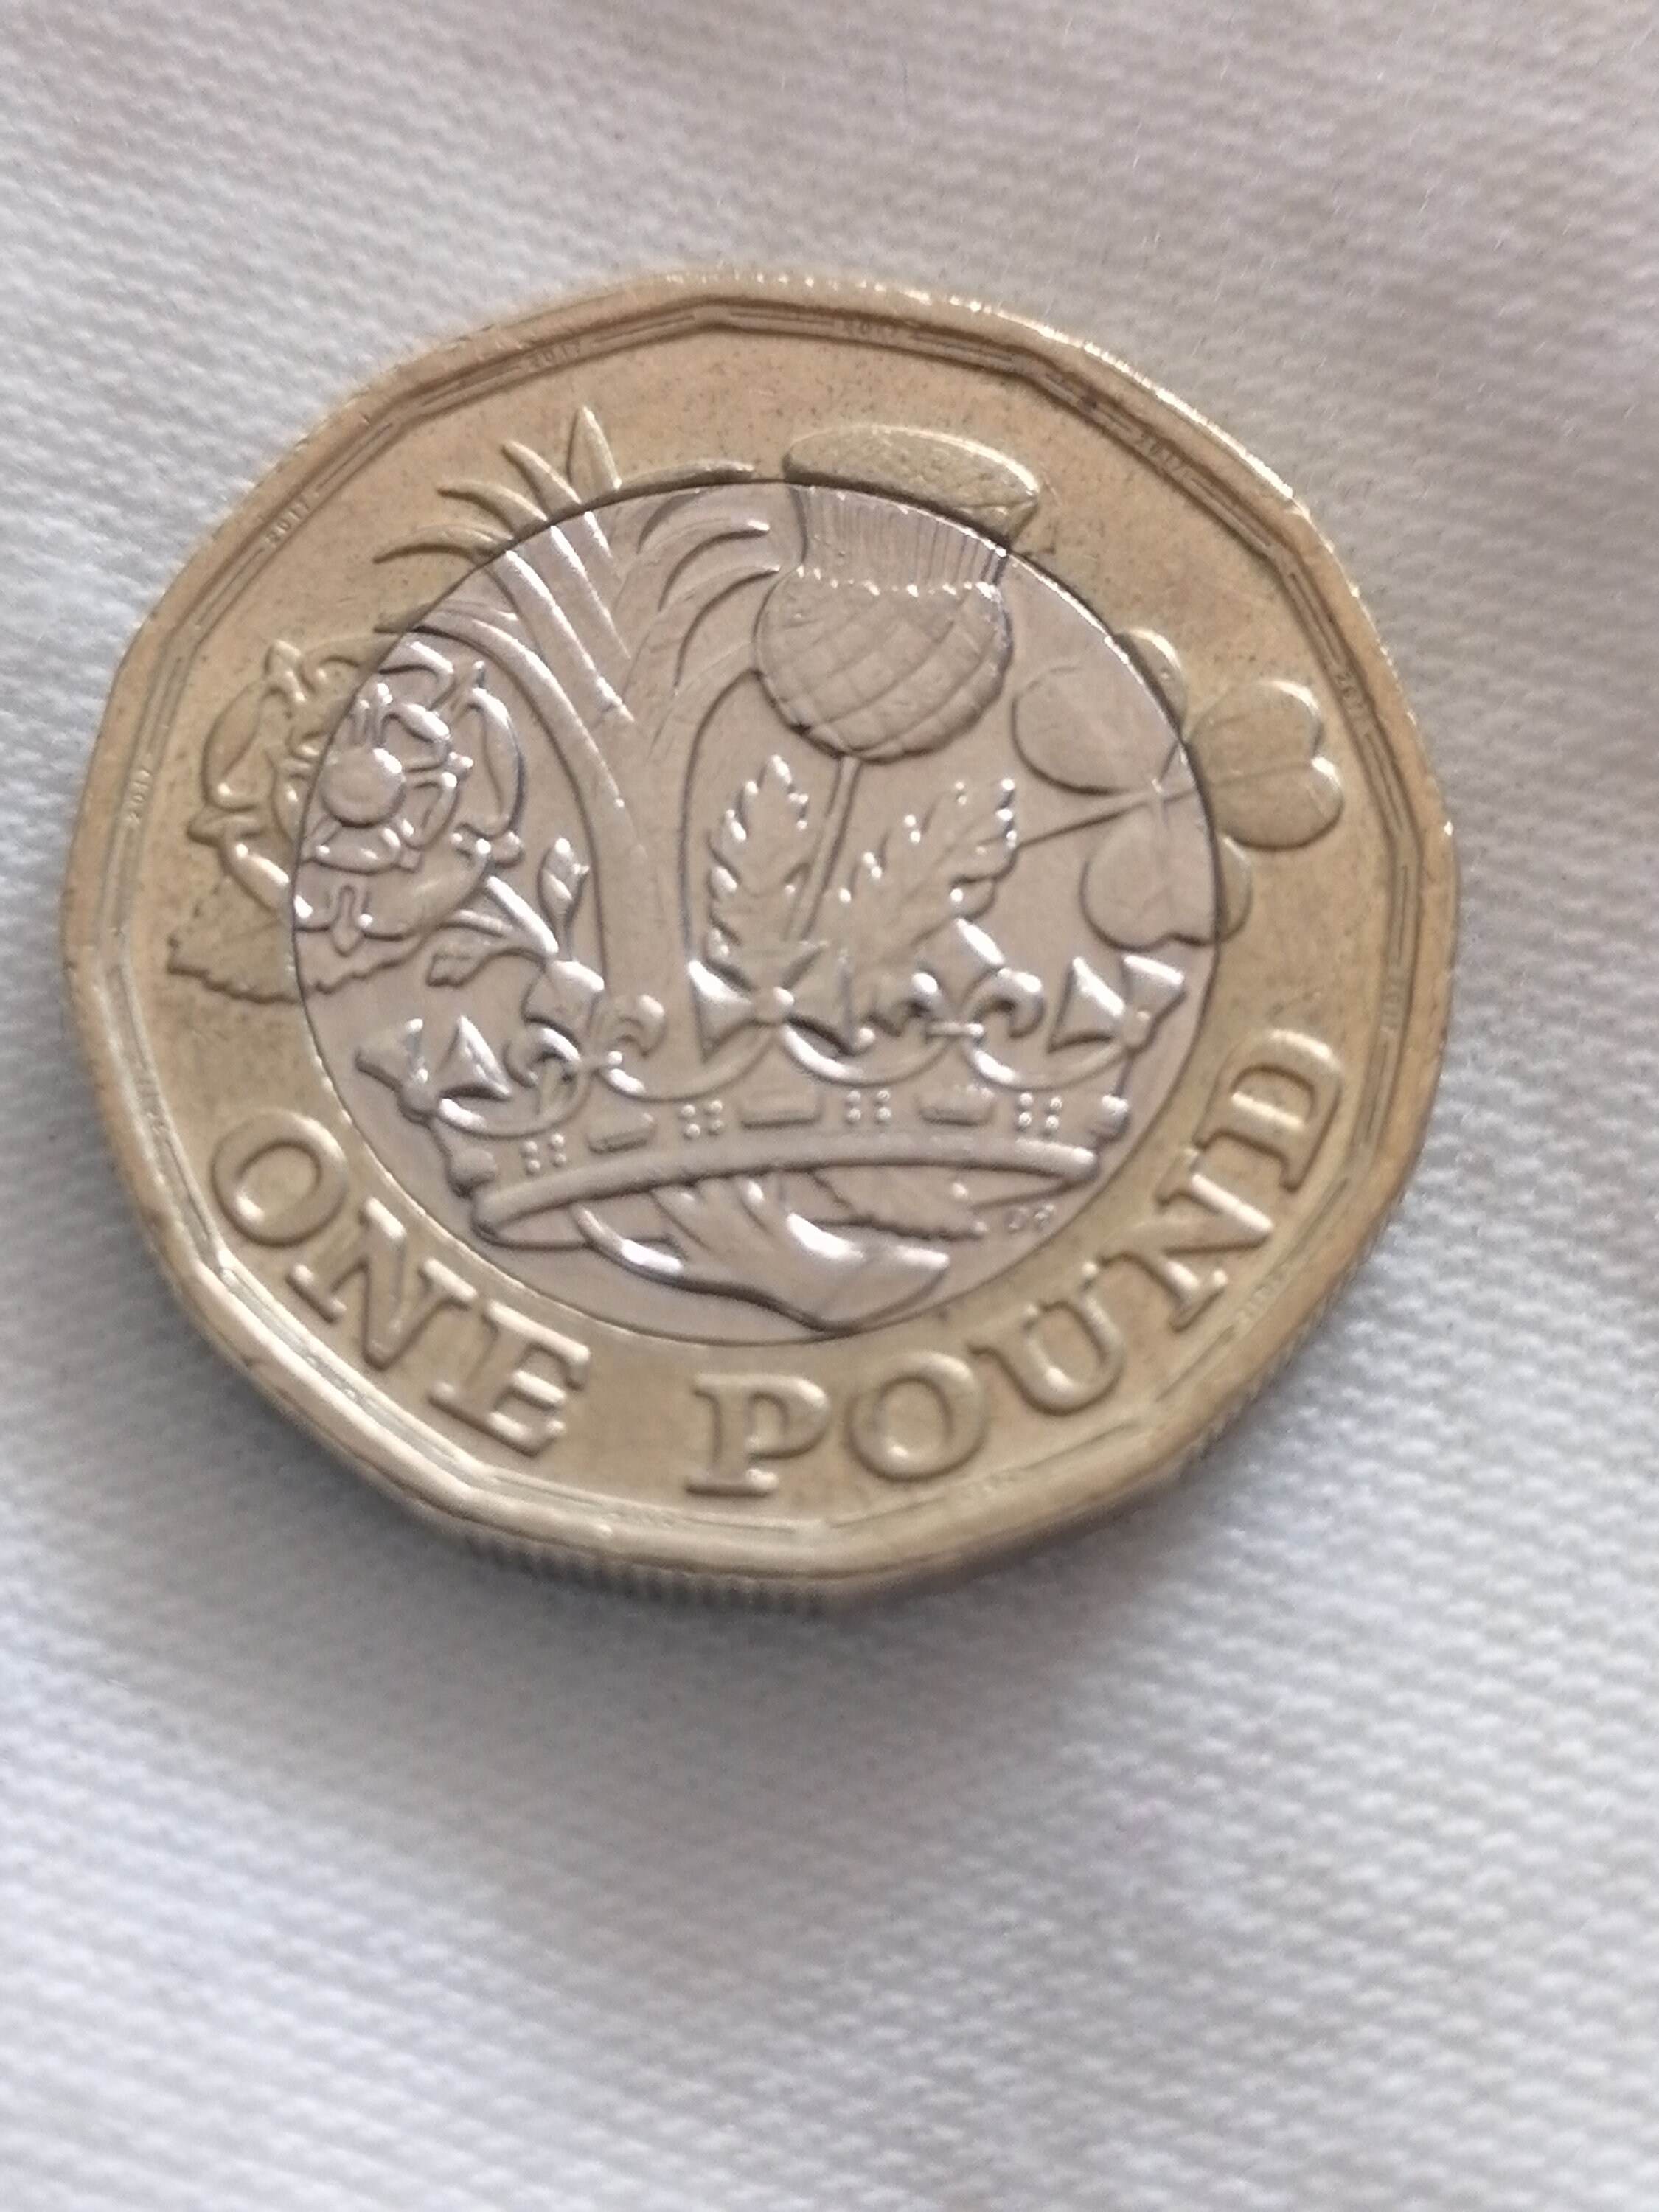 Very rare 2017 Coin Very Rare Minting Error Dark Brown Arround Both Sides